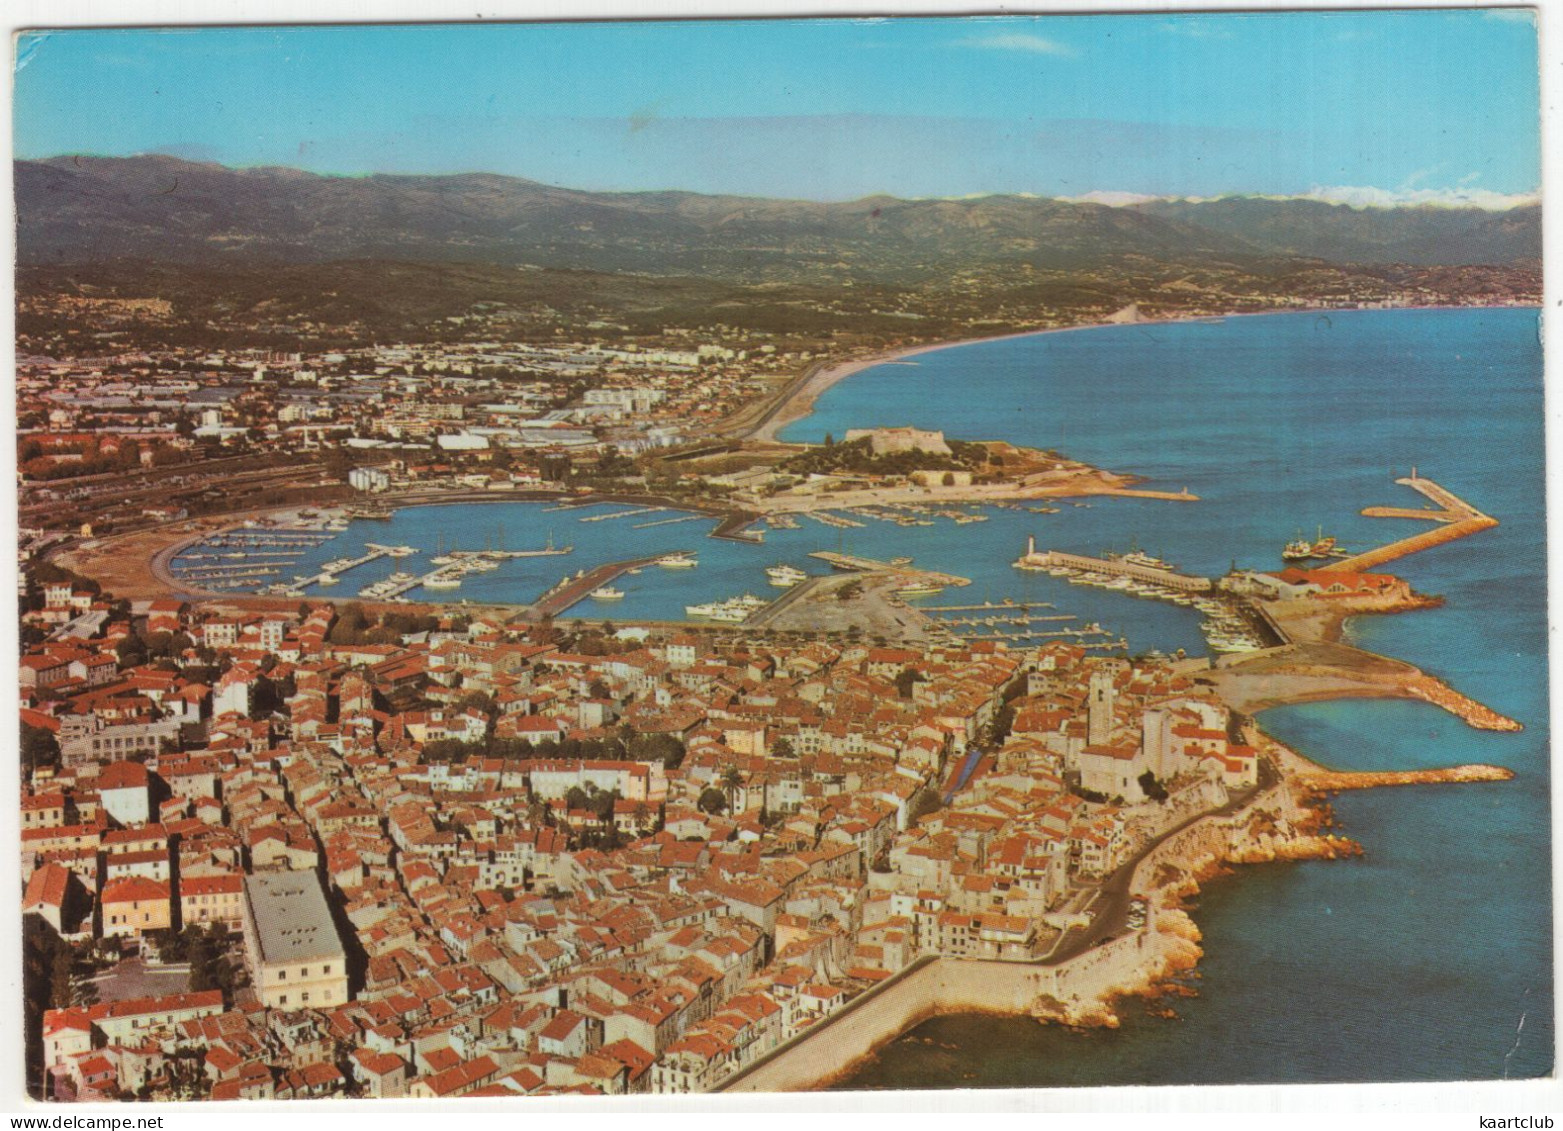 Antibes - Le Port Vauban - (France) - 1976 - Antibes - Vieille Ville